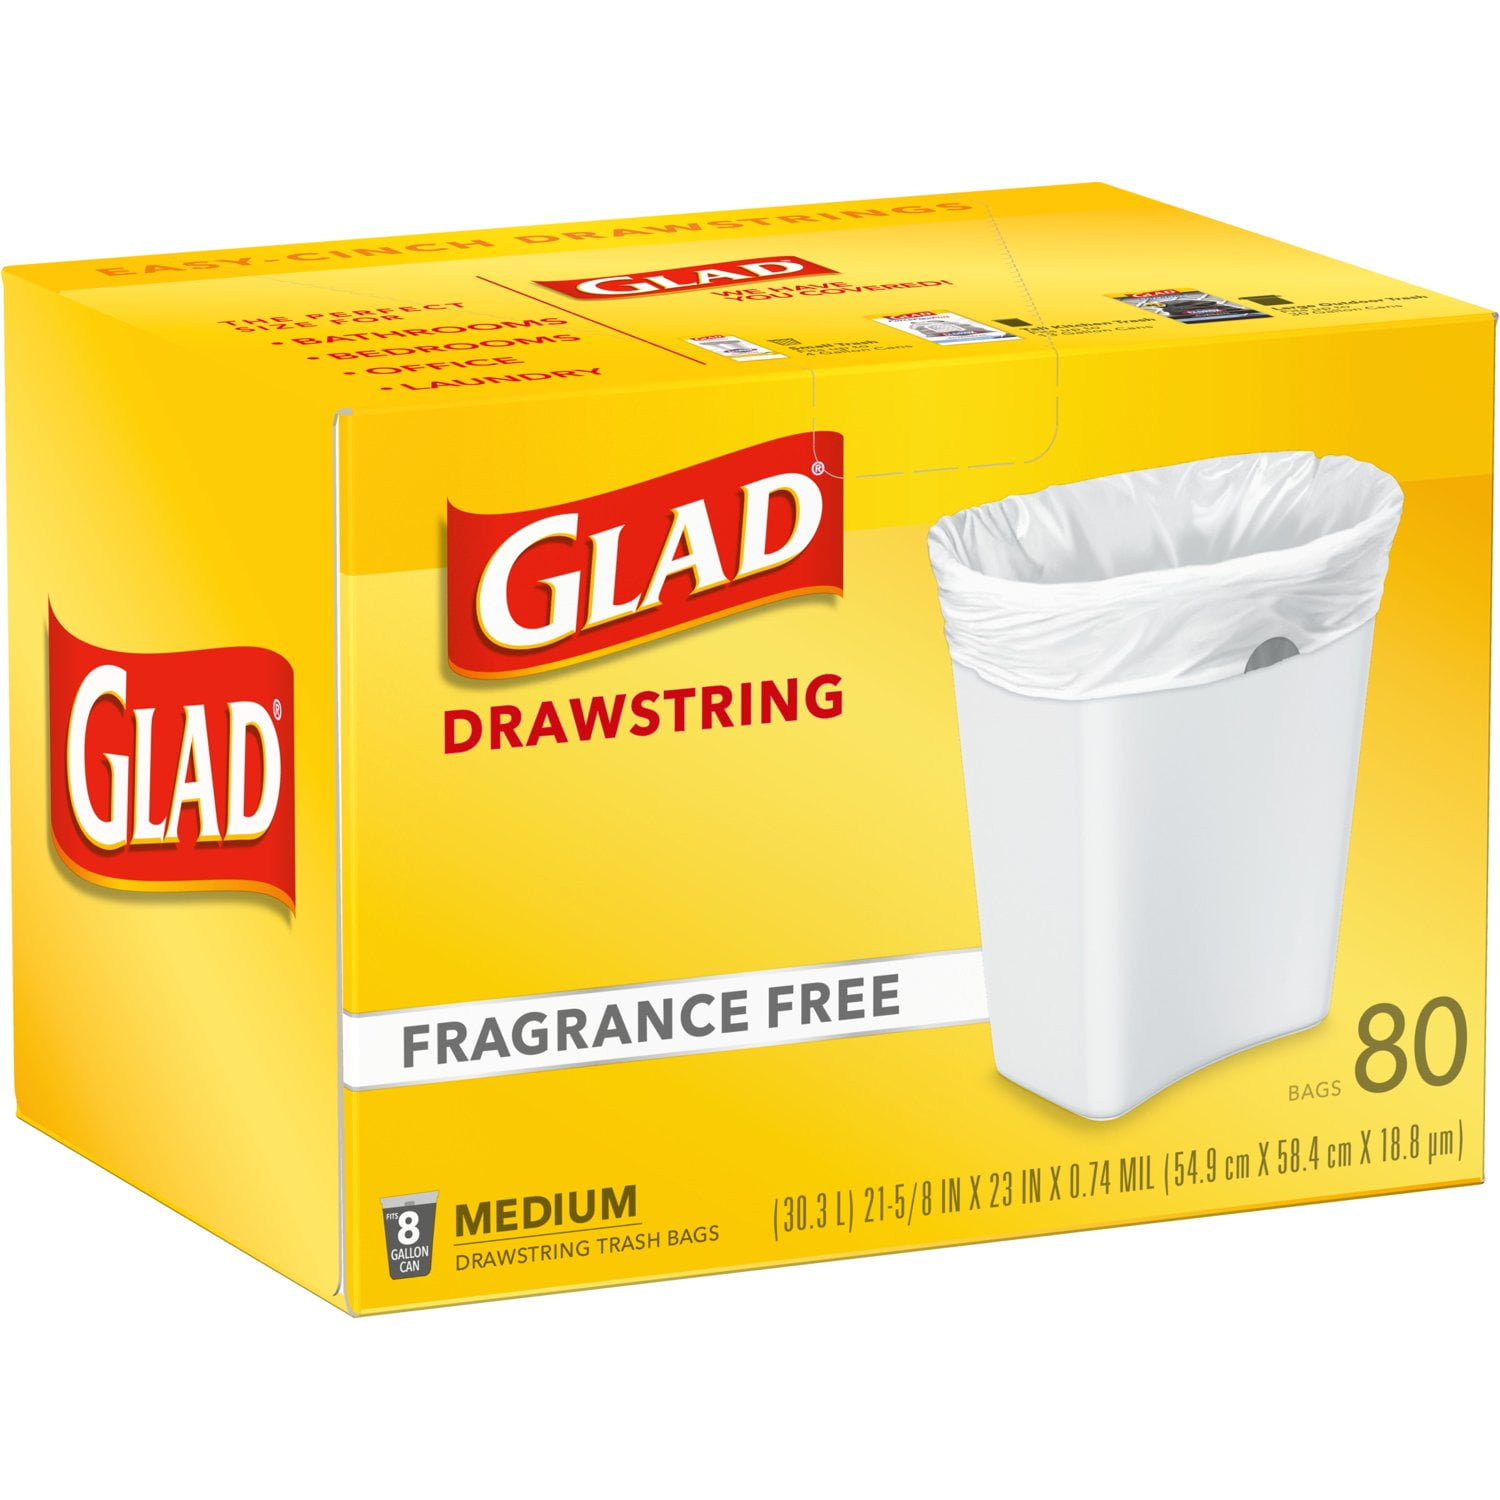 Glad® OdorShield® Medium Quick-Tie® Trash Bags